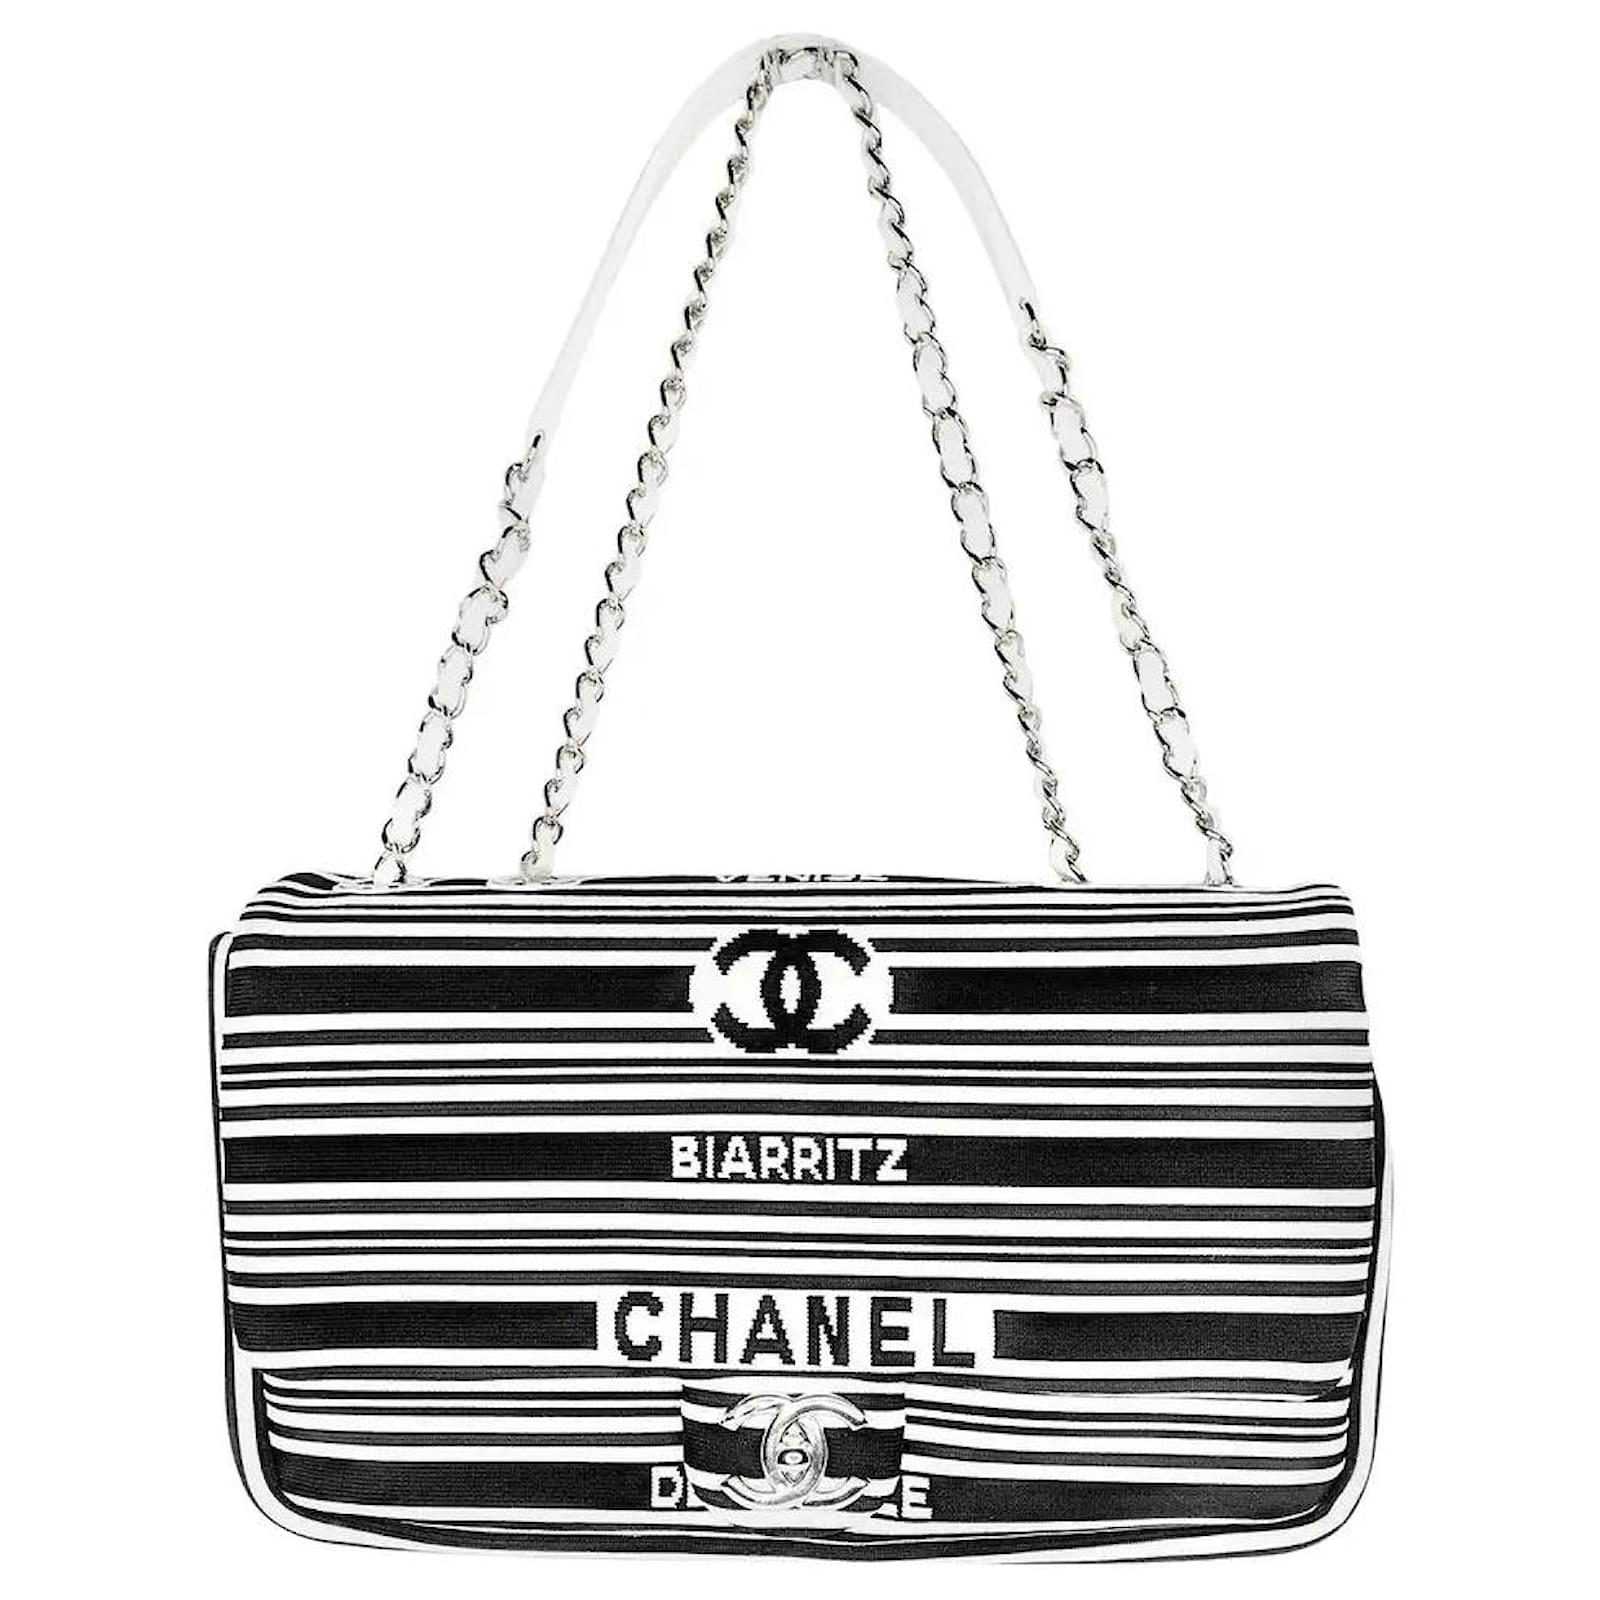 Timeless Chanel 2019 venise biarittz black and white canvas medium